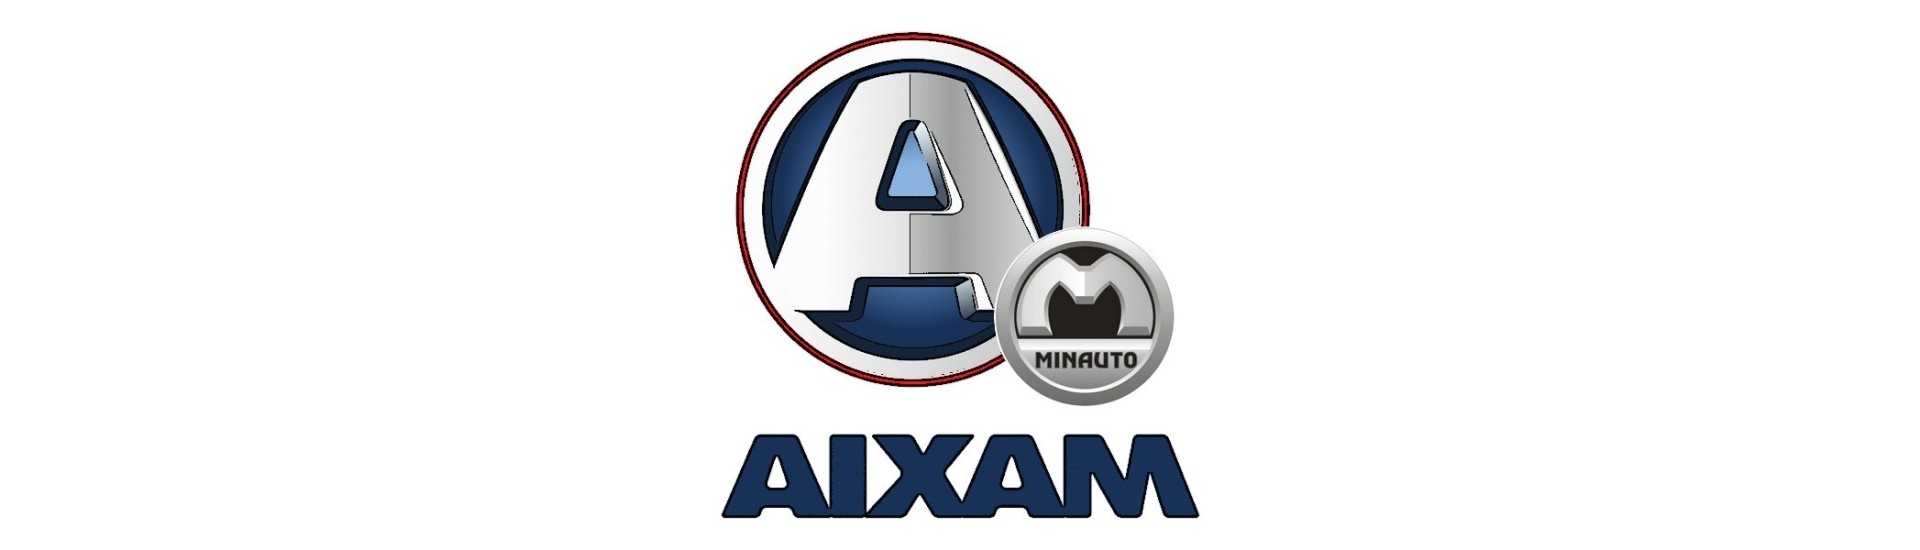 Heizradiator für Auto ohne Lizenz Aixam Minauto